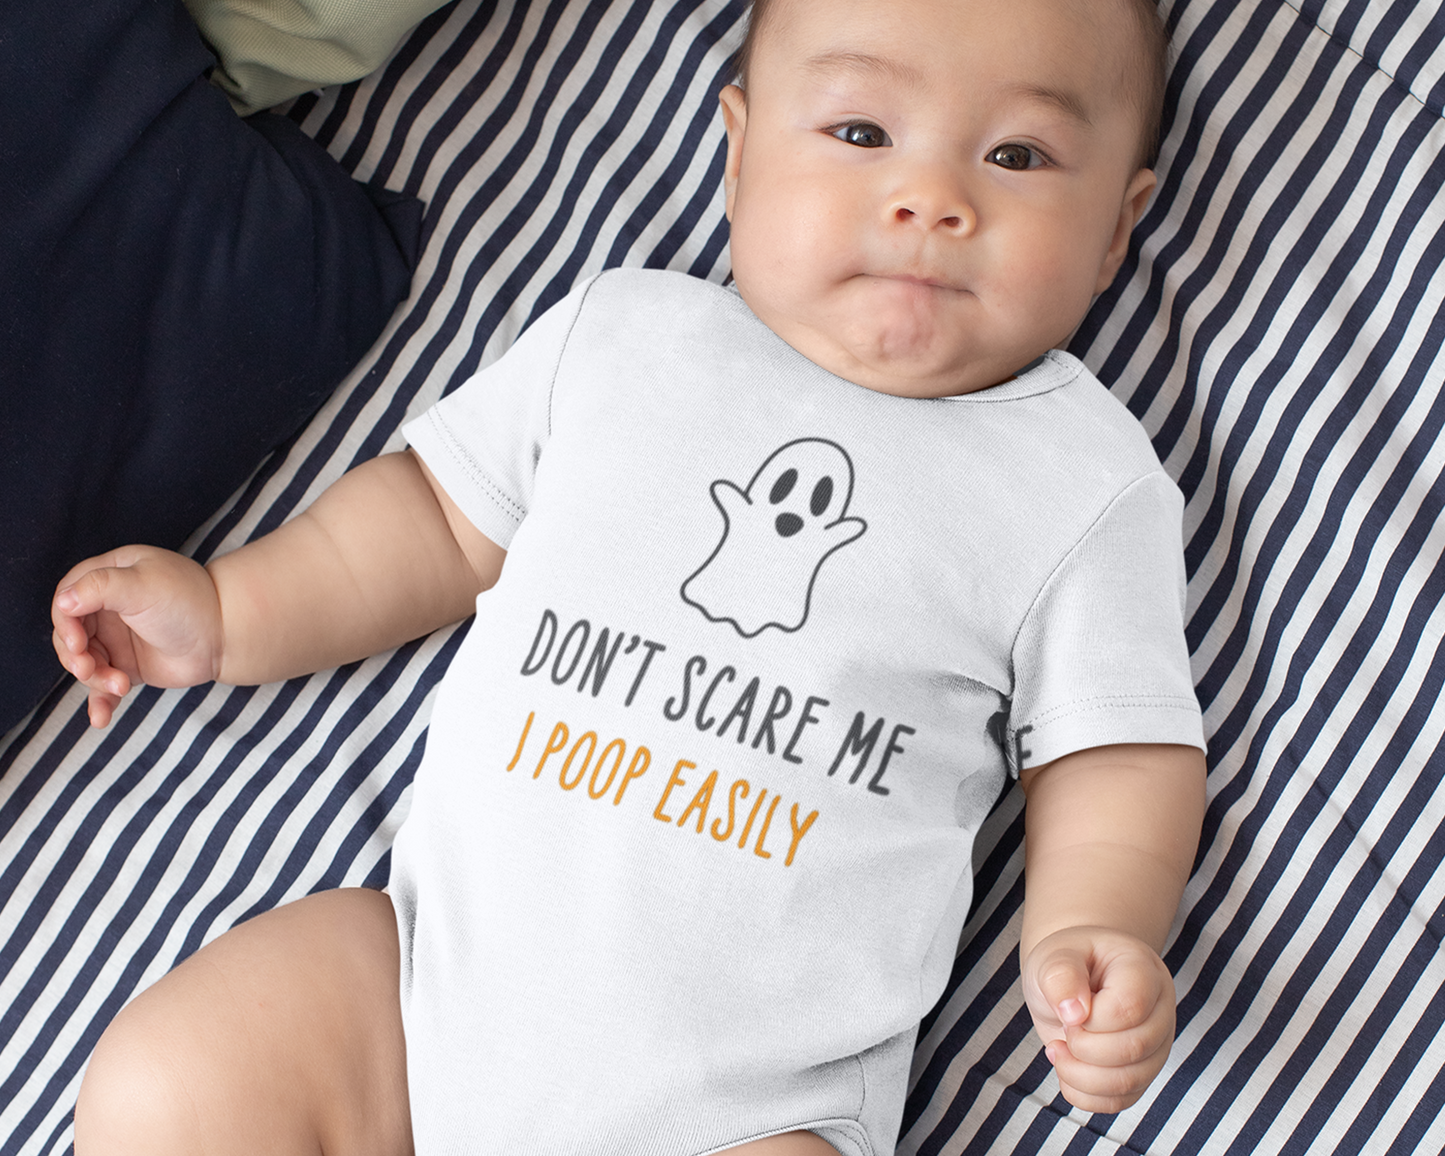 Don't Scare Me - I poop easily | Funny Halloween Baby Onesie Bodysuit